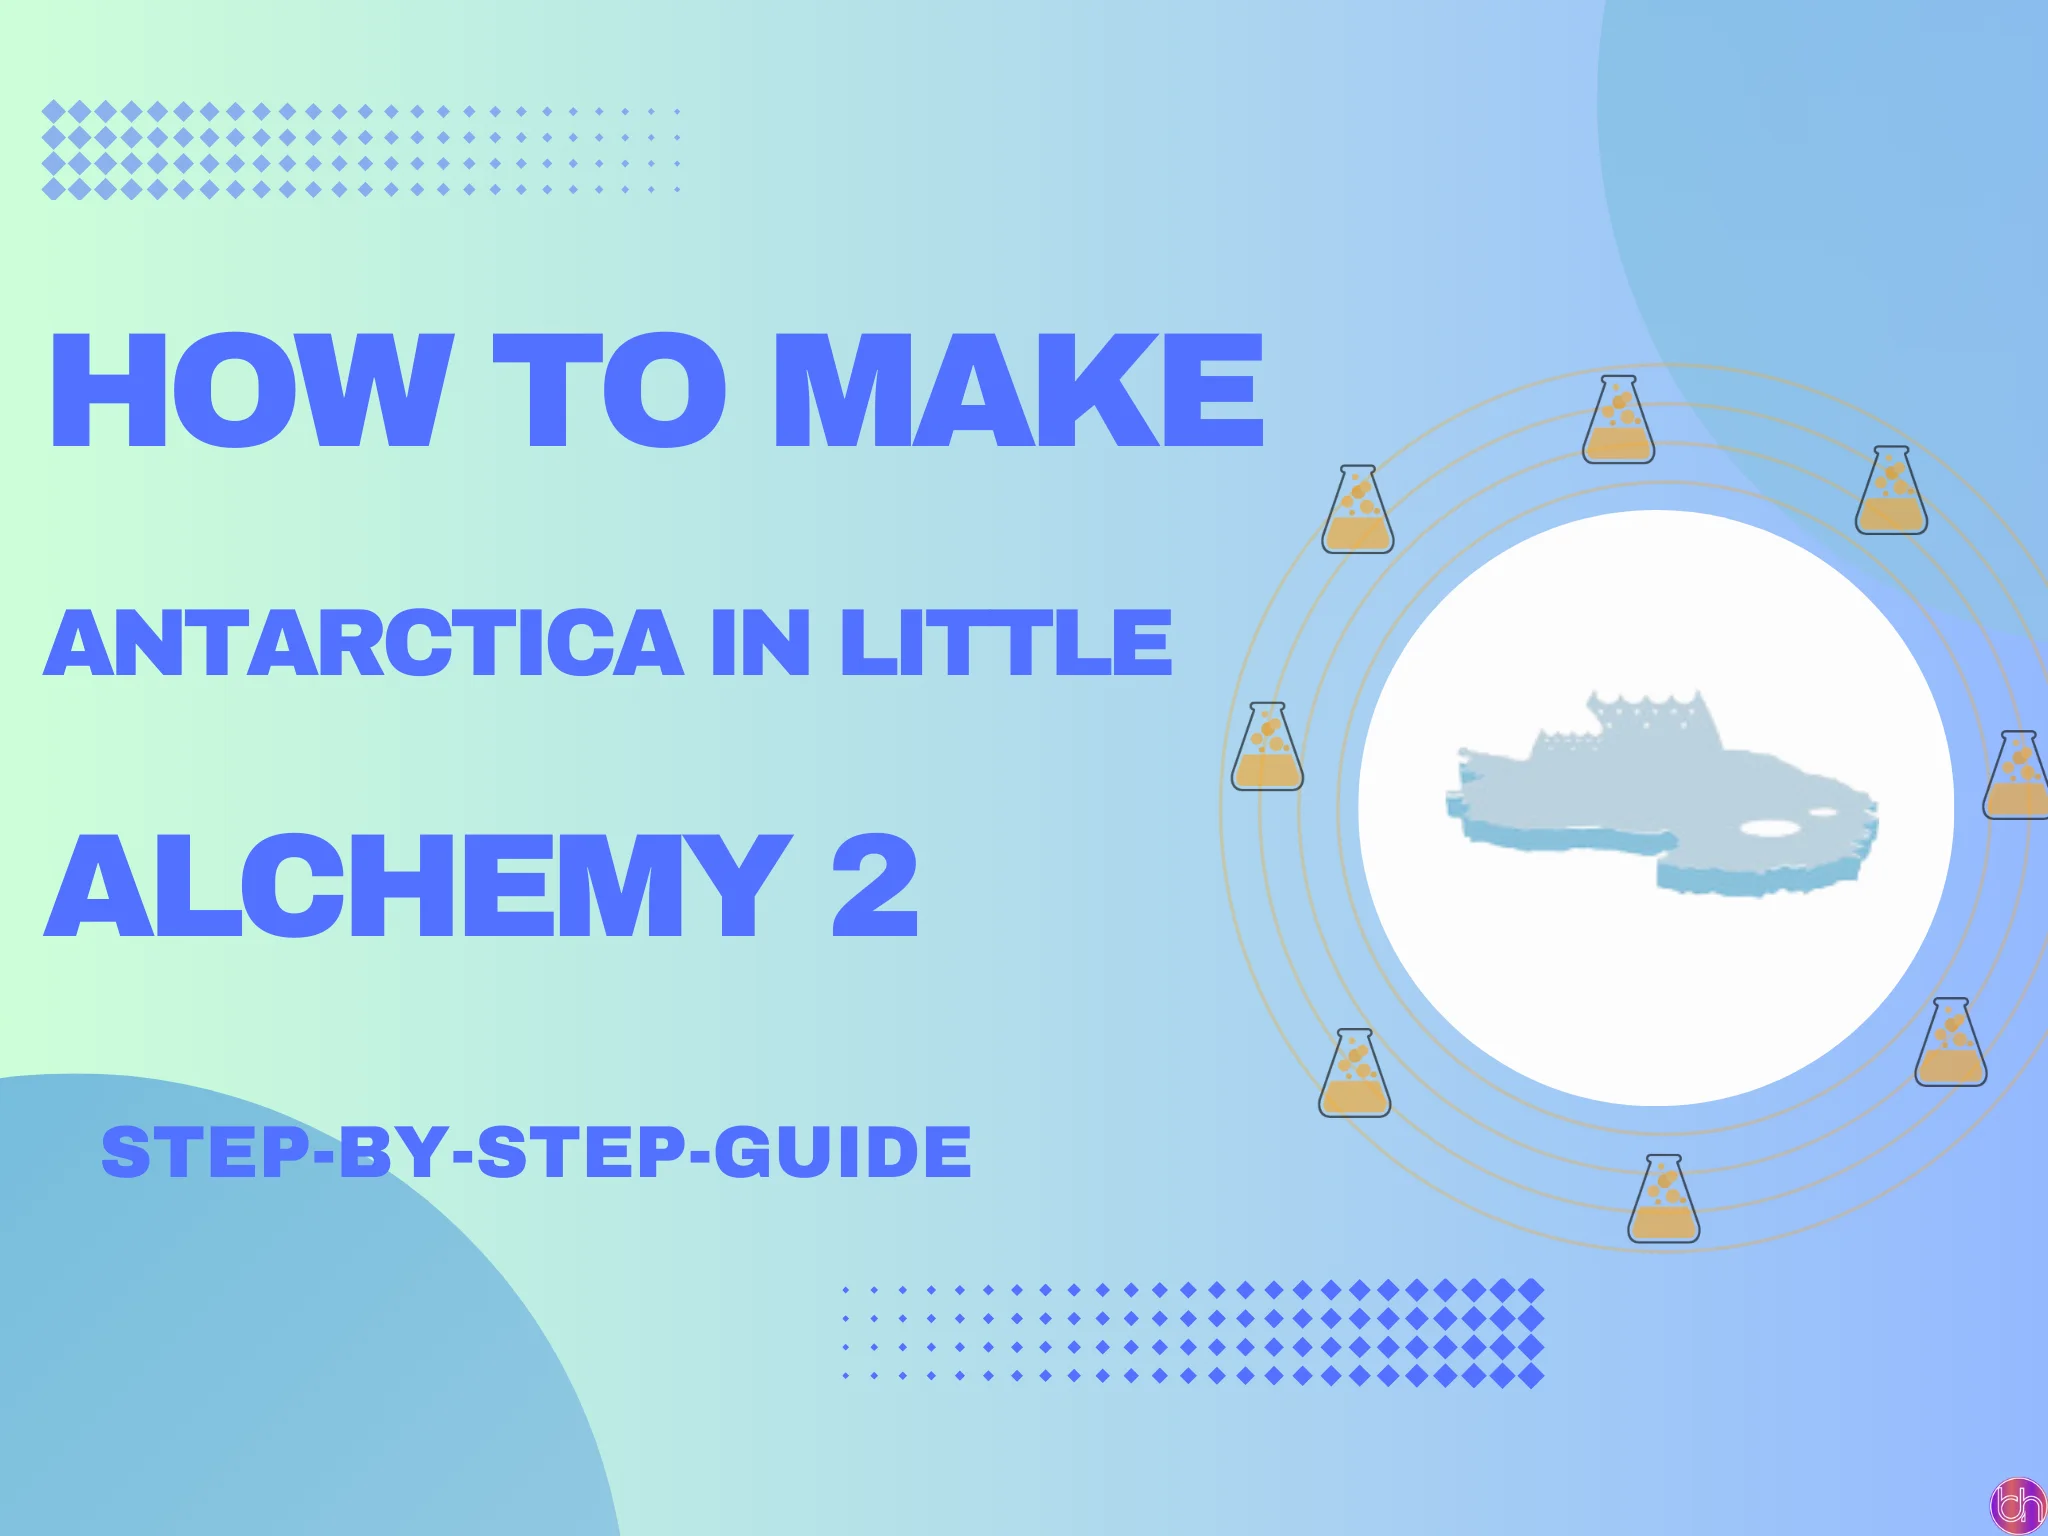 ho wto make Antarctica in little alchemy 2